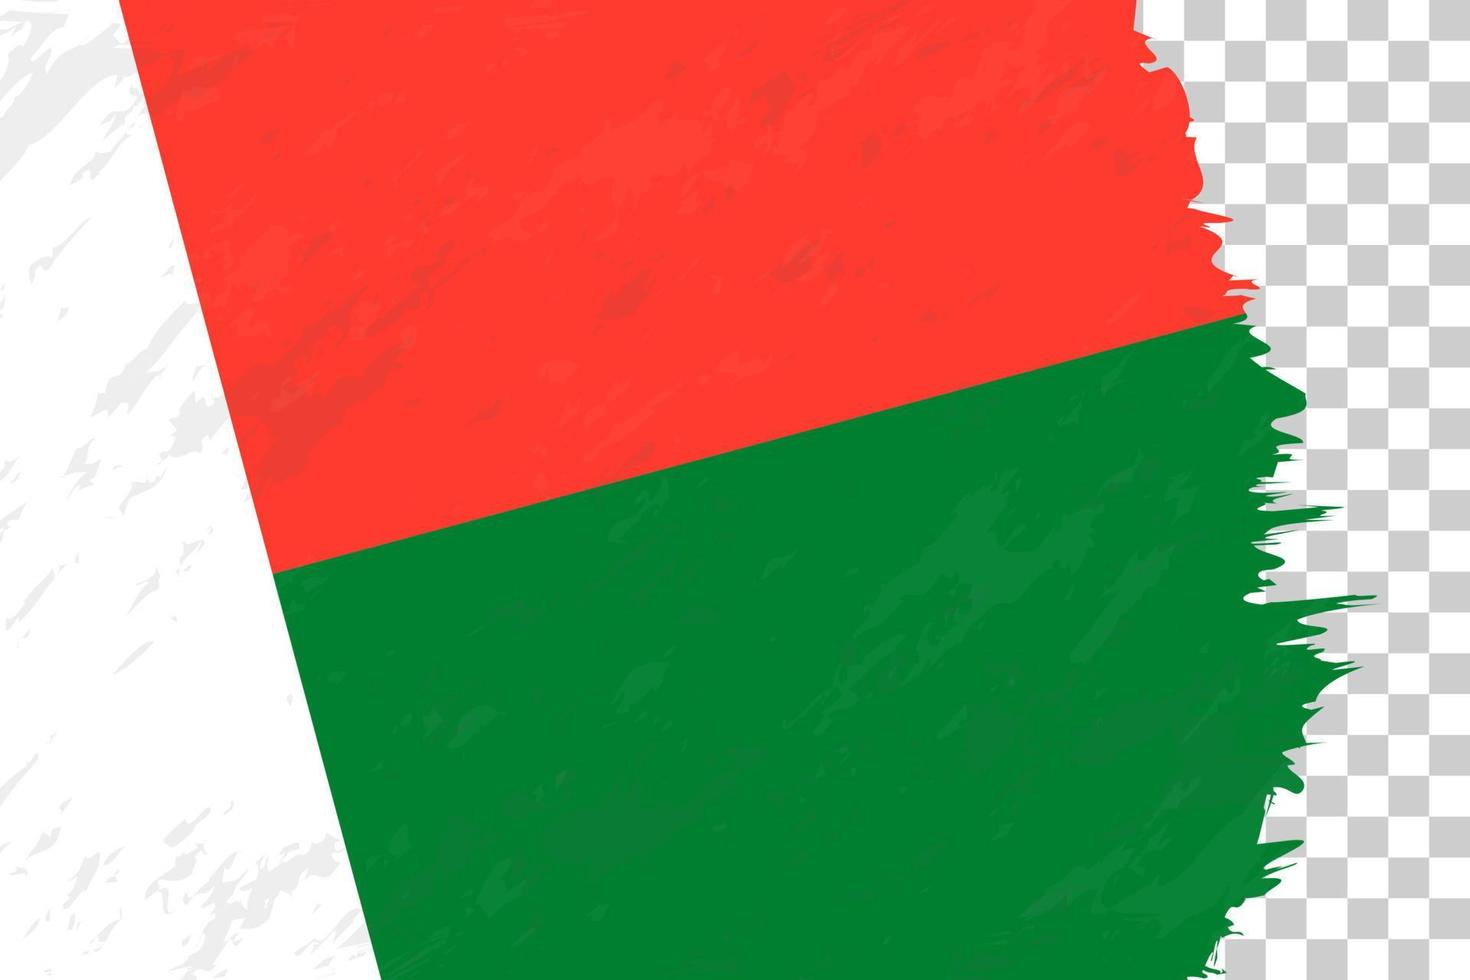 Horizontal Abstract Grunge Brushed Flag of Madagascar on Transparent Grid. vector